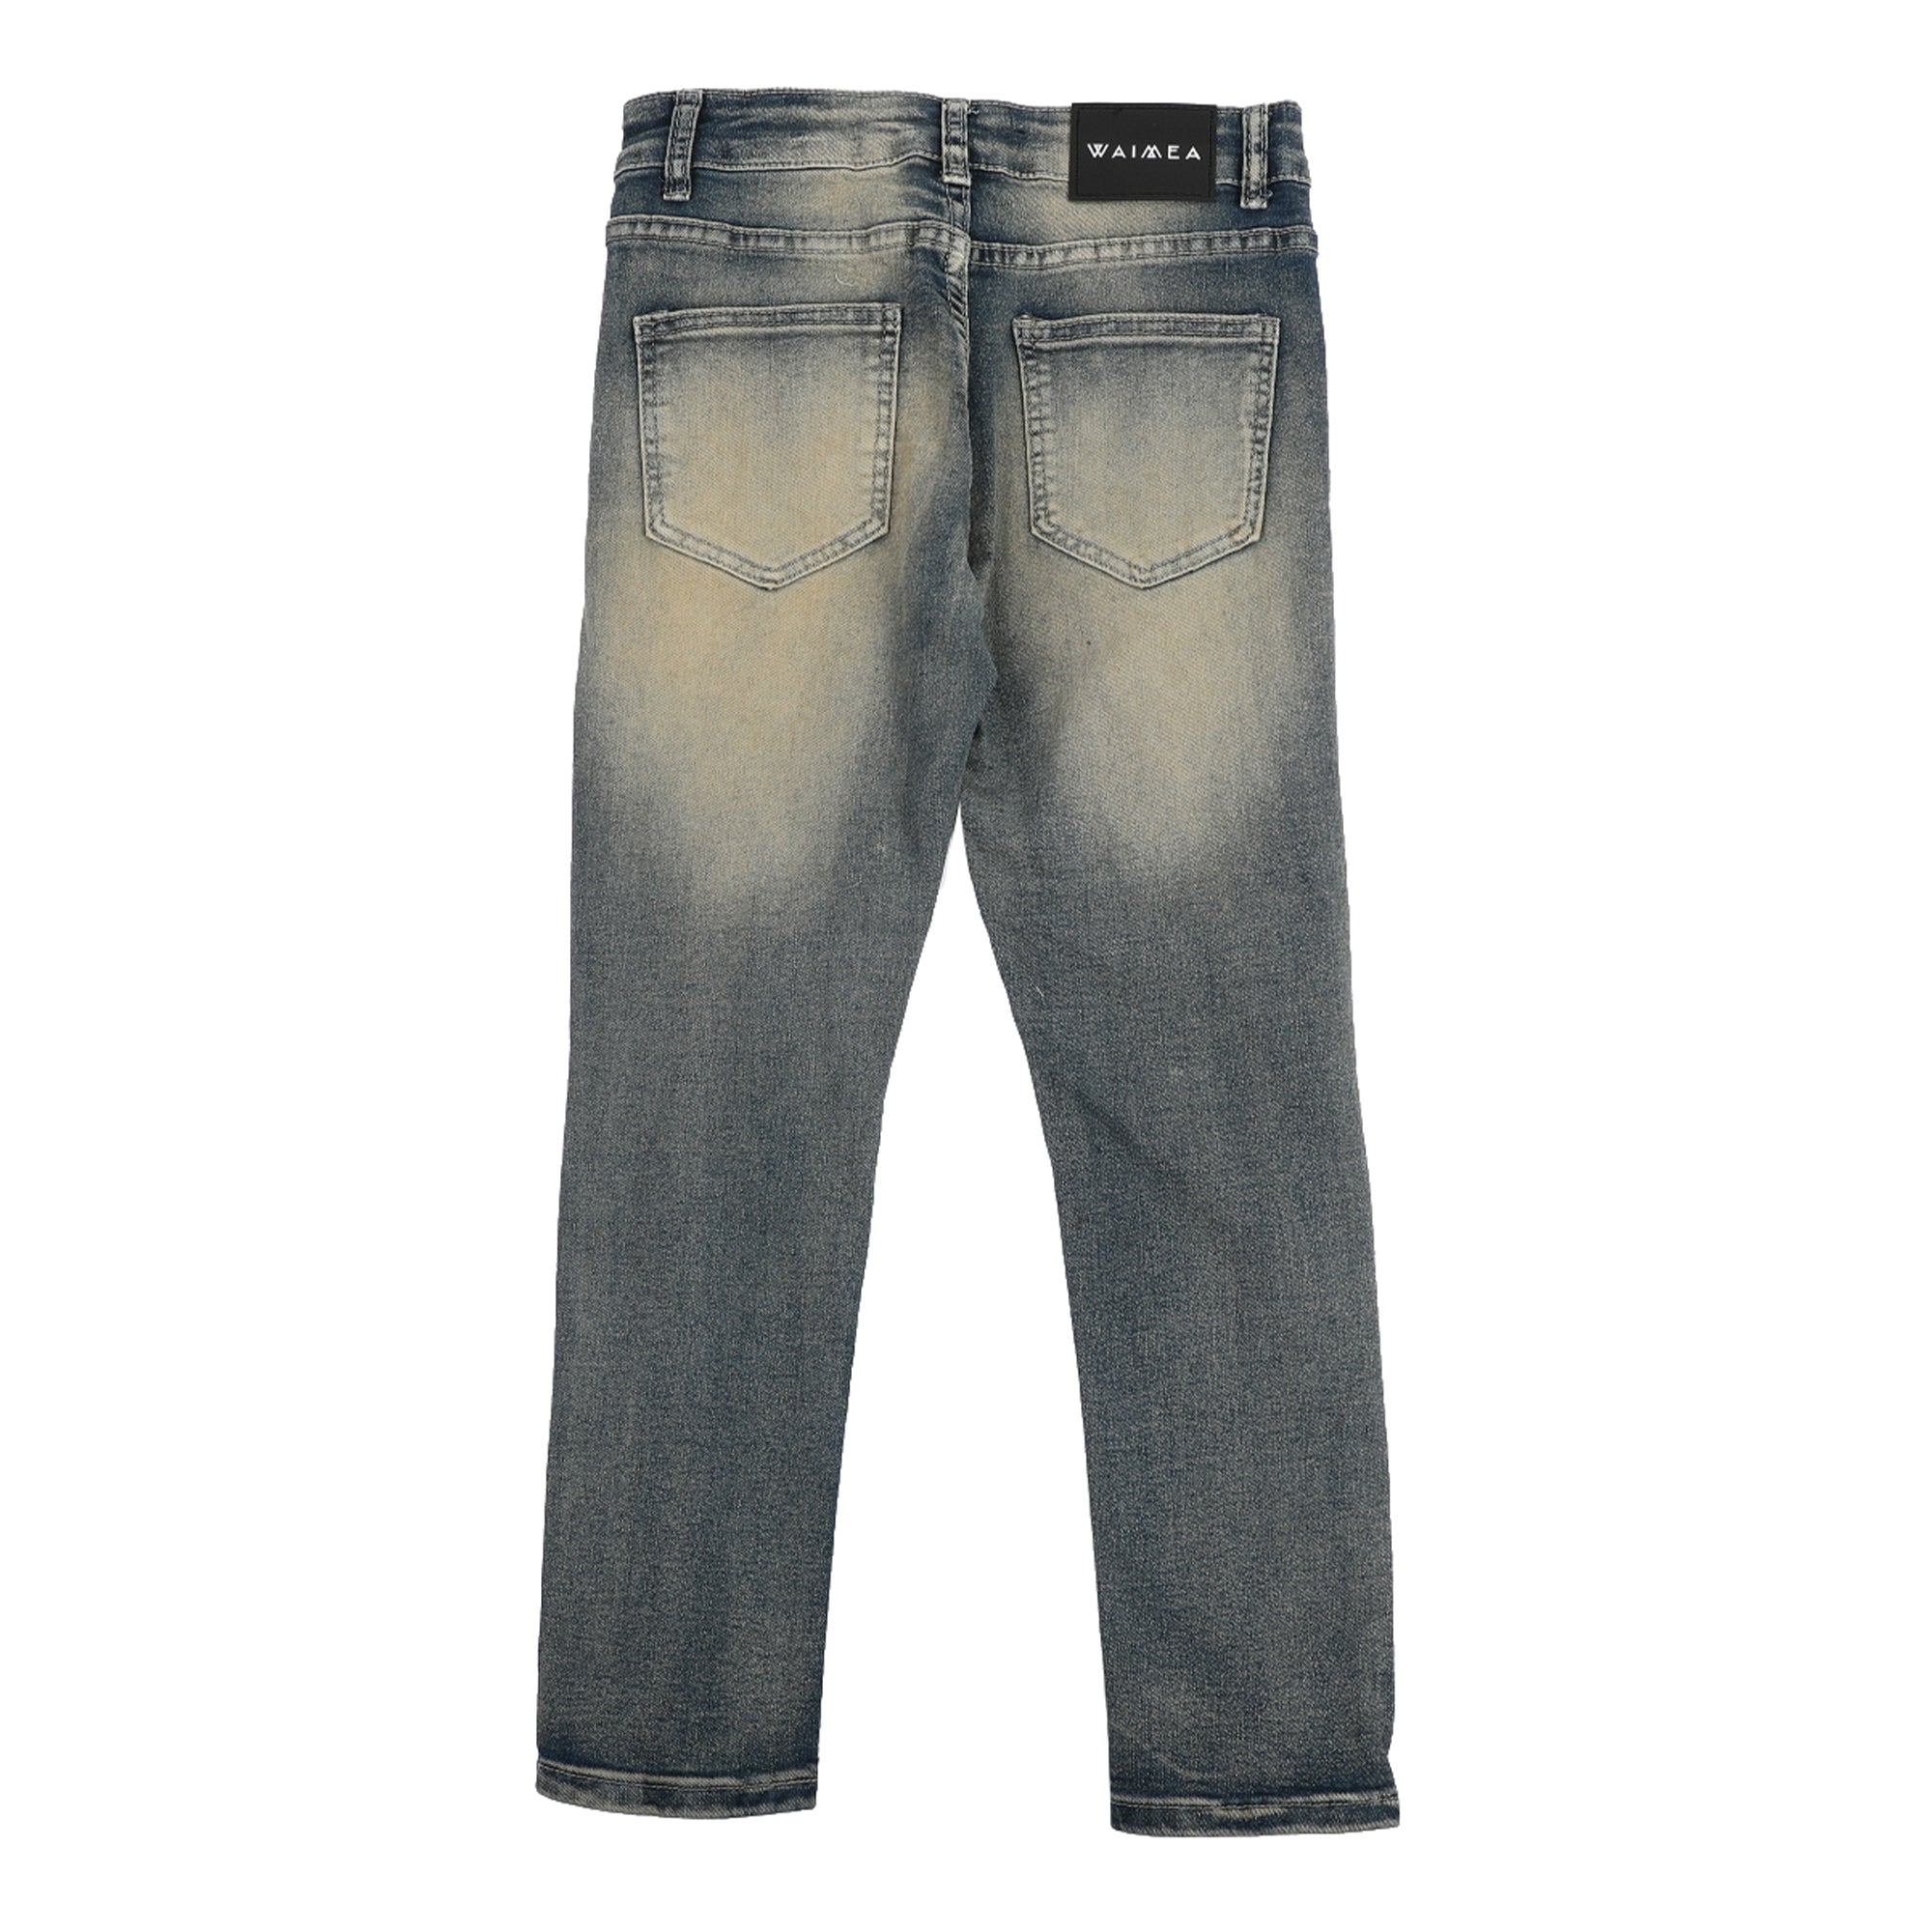 WaiMea Men Ripped Backed Jeans (Vintage Wash)-Nexus Clothing